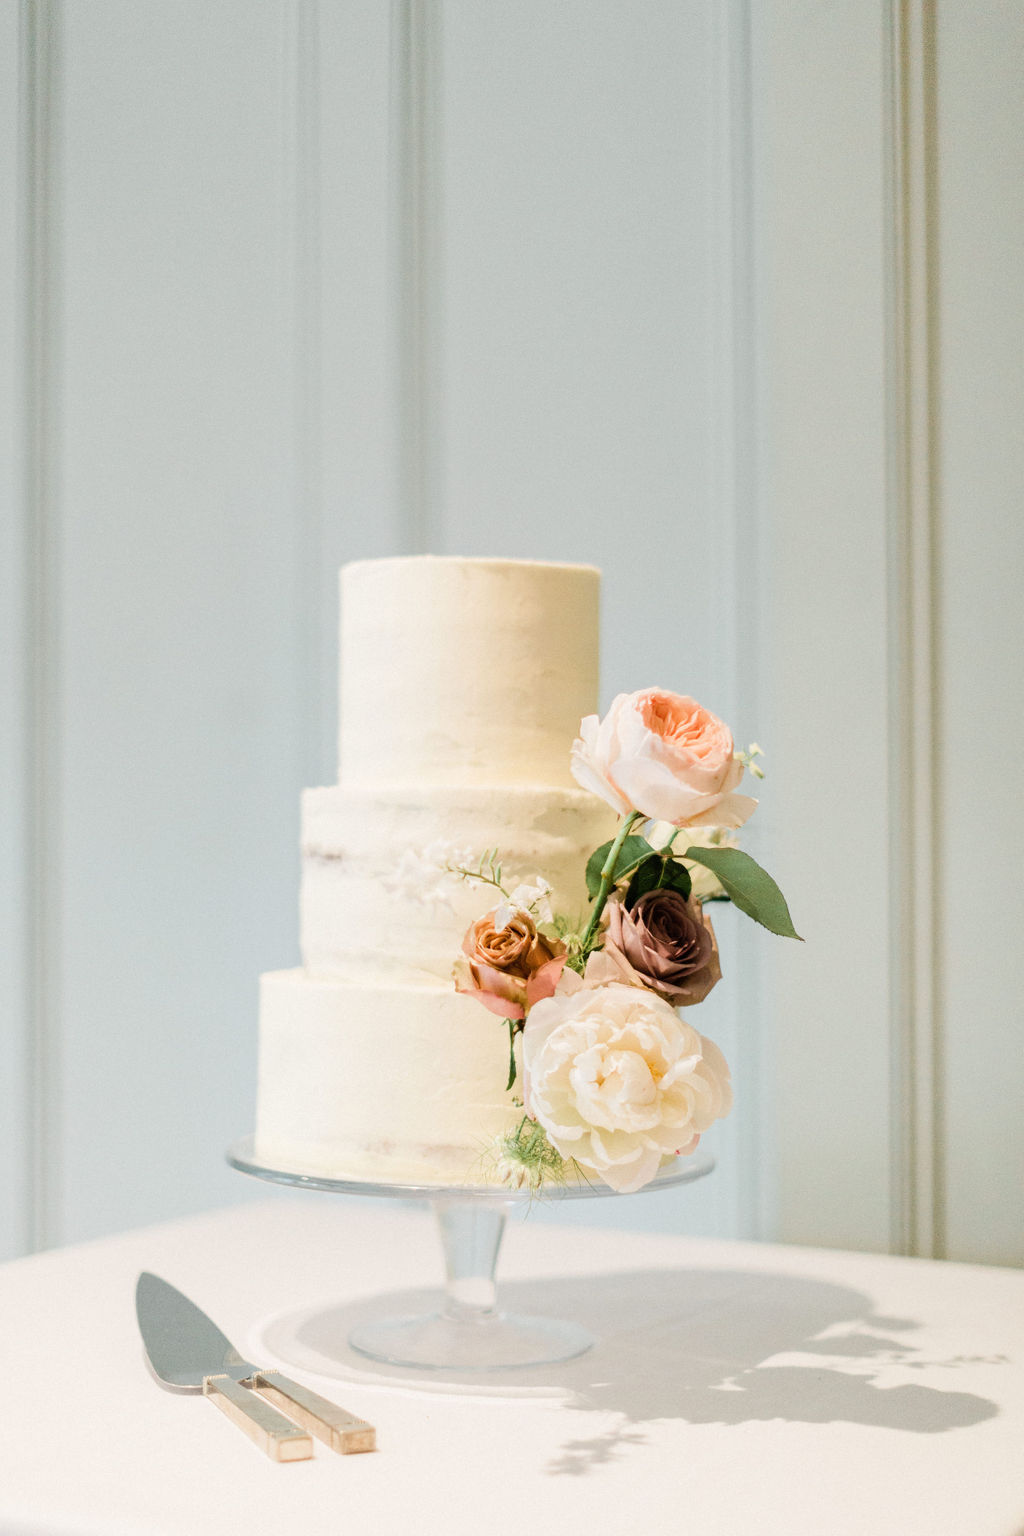 Simple yet elegant buttercream wedding cake for Bingham Riverhouse, Richmond upon Thames, London. Photo by Jacob and Pauline